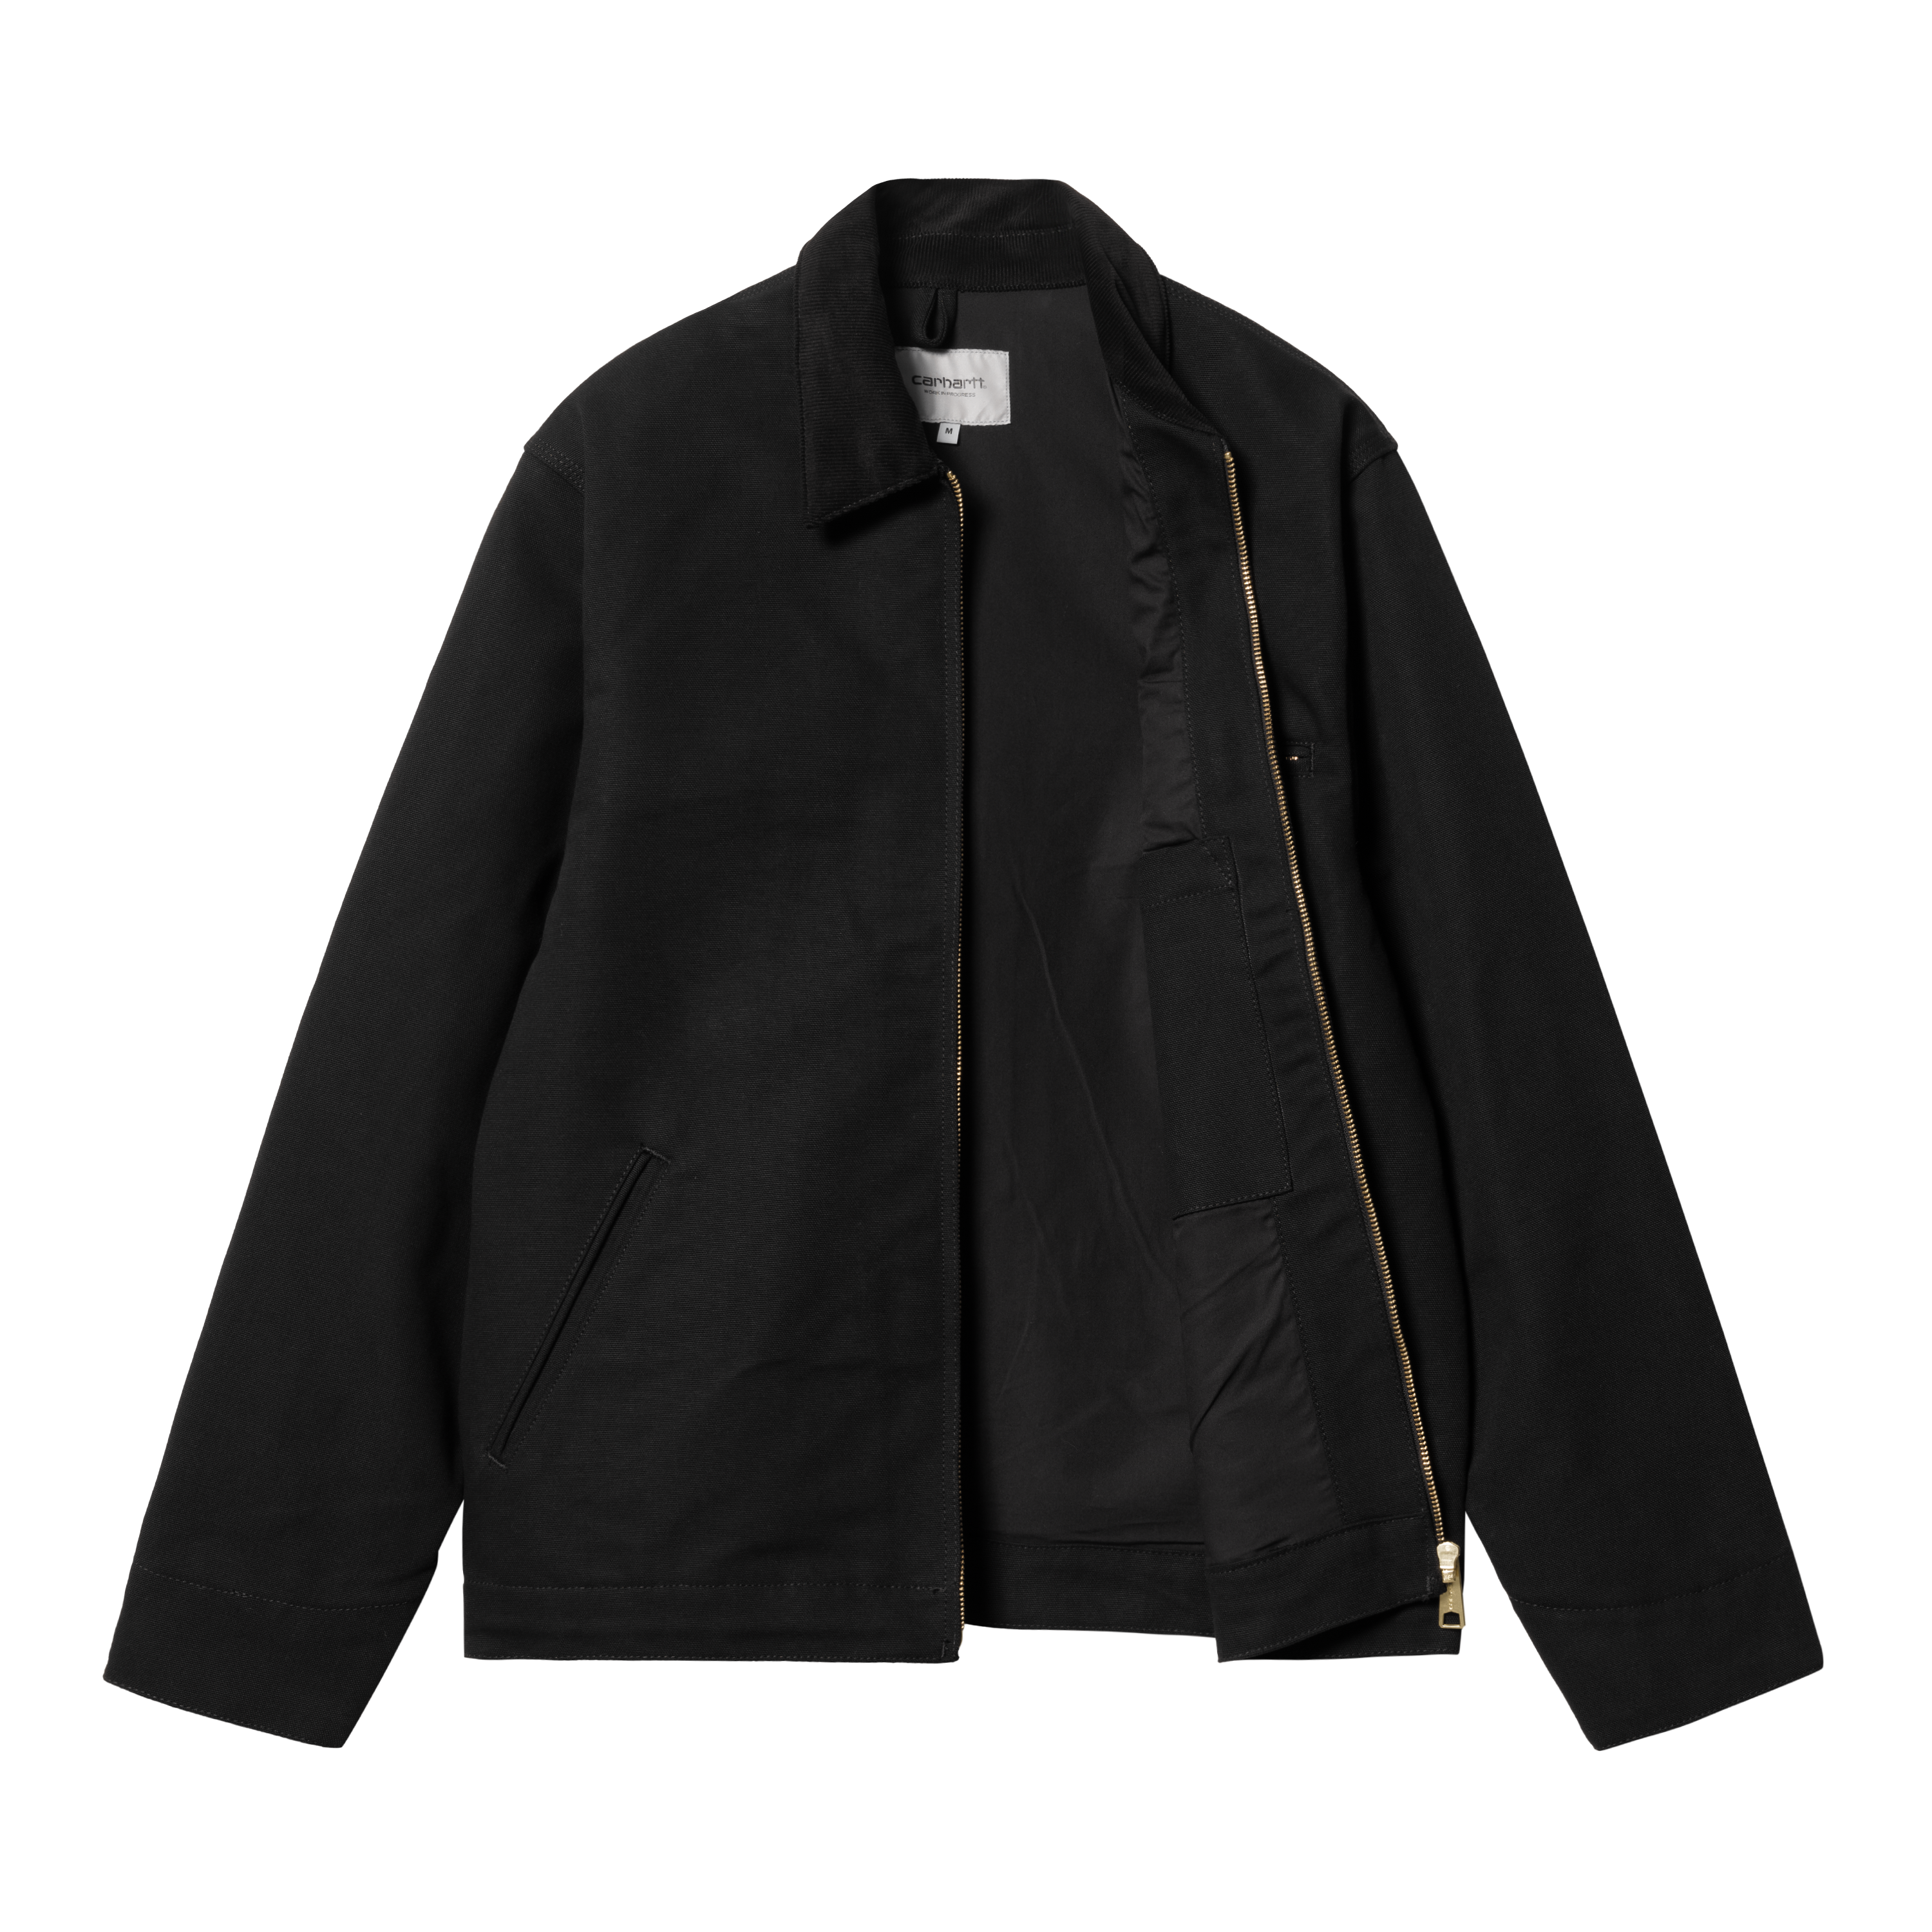 Carhartt WIP Detroit Jacket (black/black)